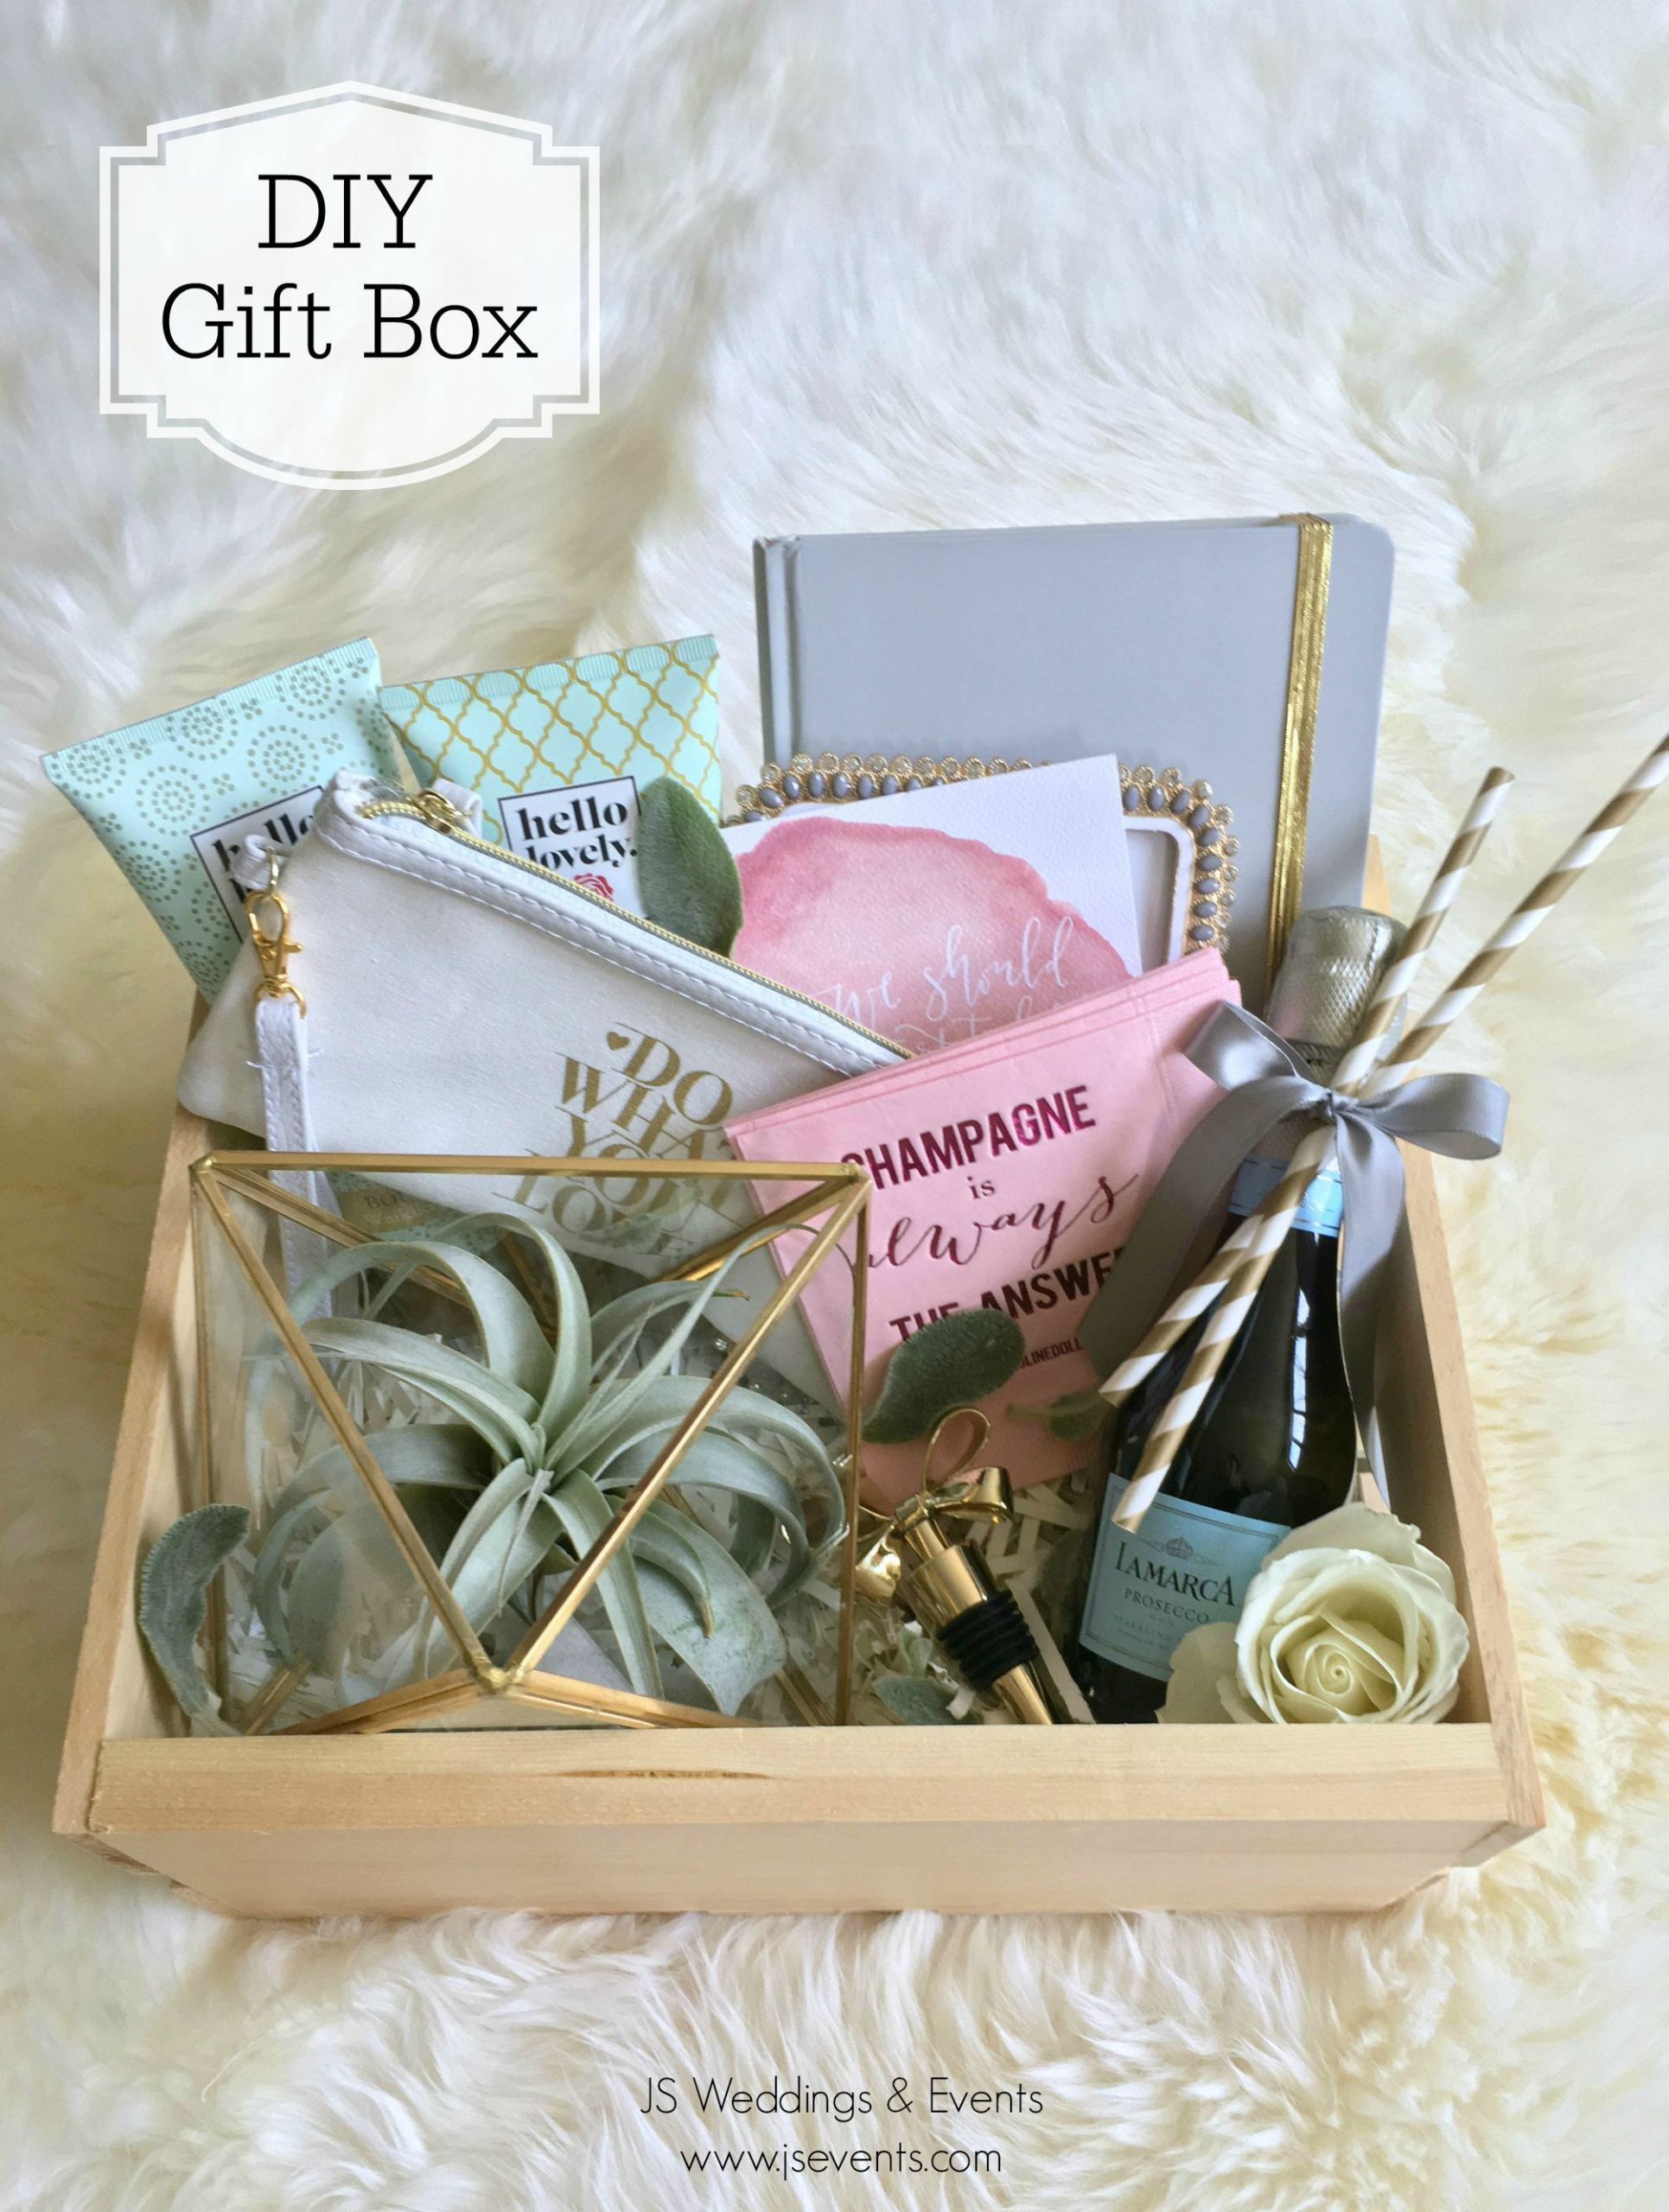 DIY Wedding Gift Baskets
 DIY Gift Box